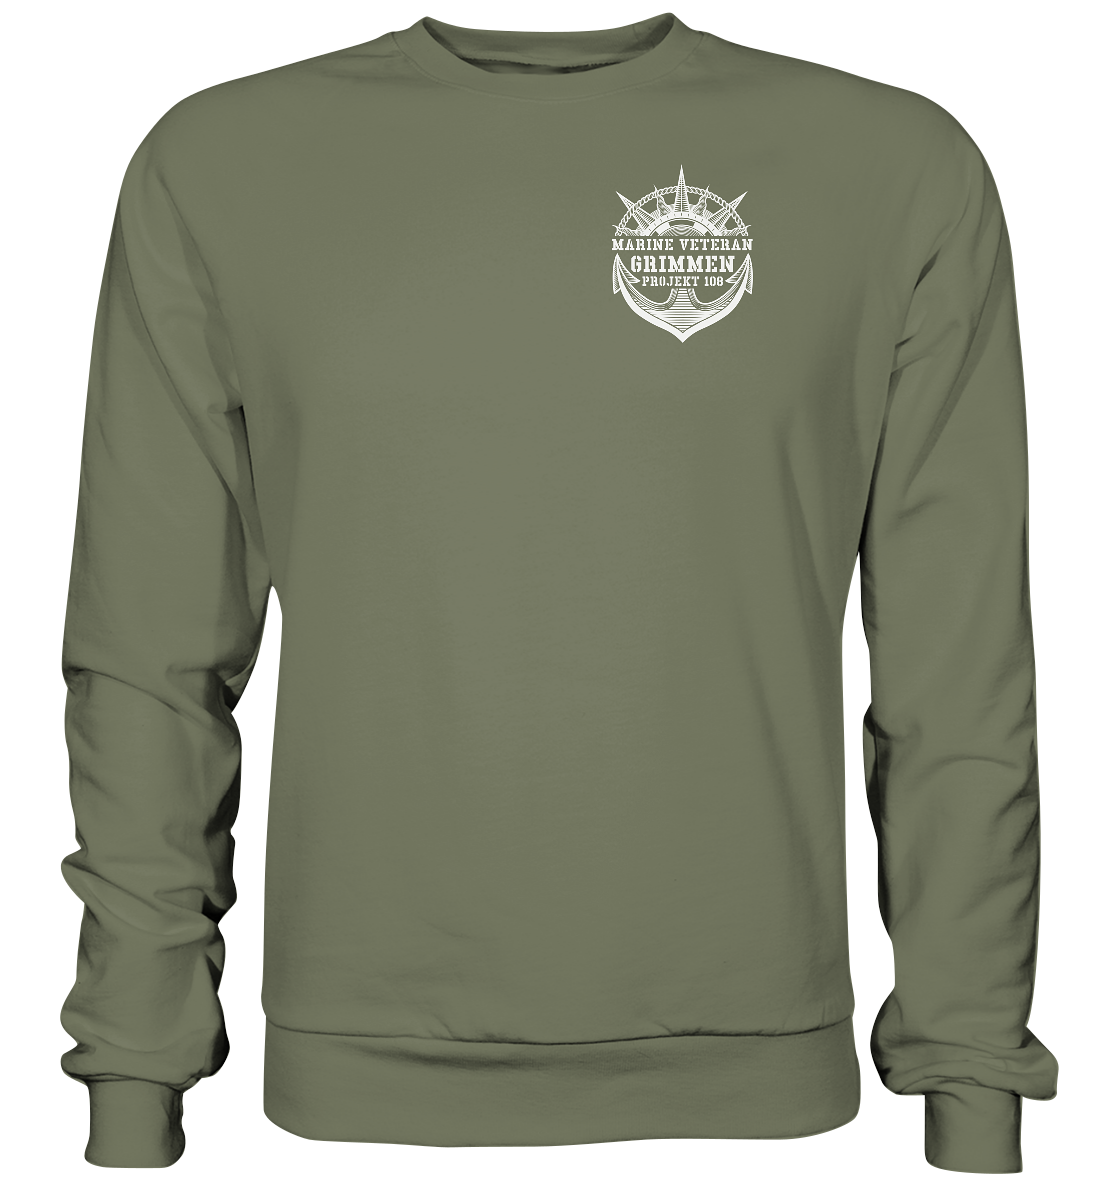 Projekt 108 GRIMMEN Marine Veteran Brustlogo - Premium Sweatshirt